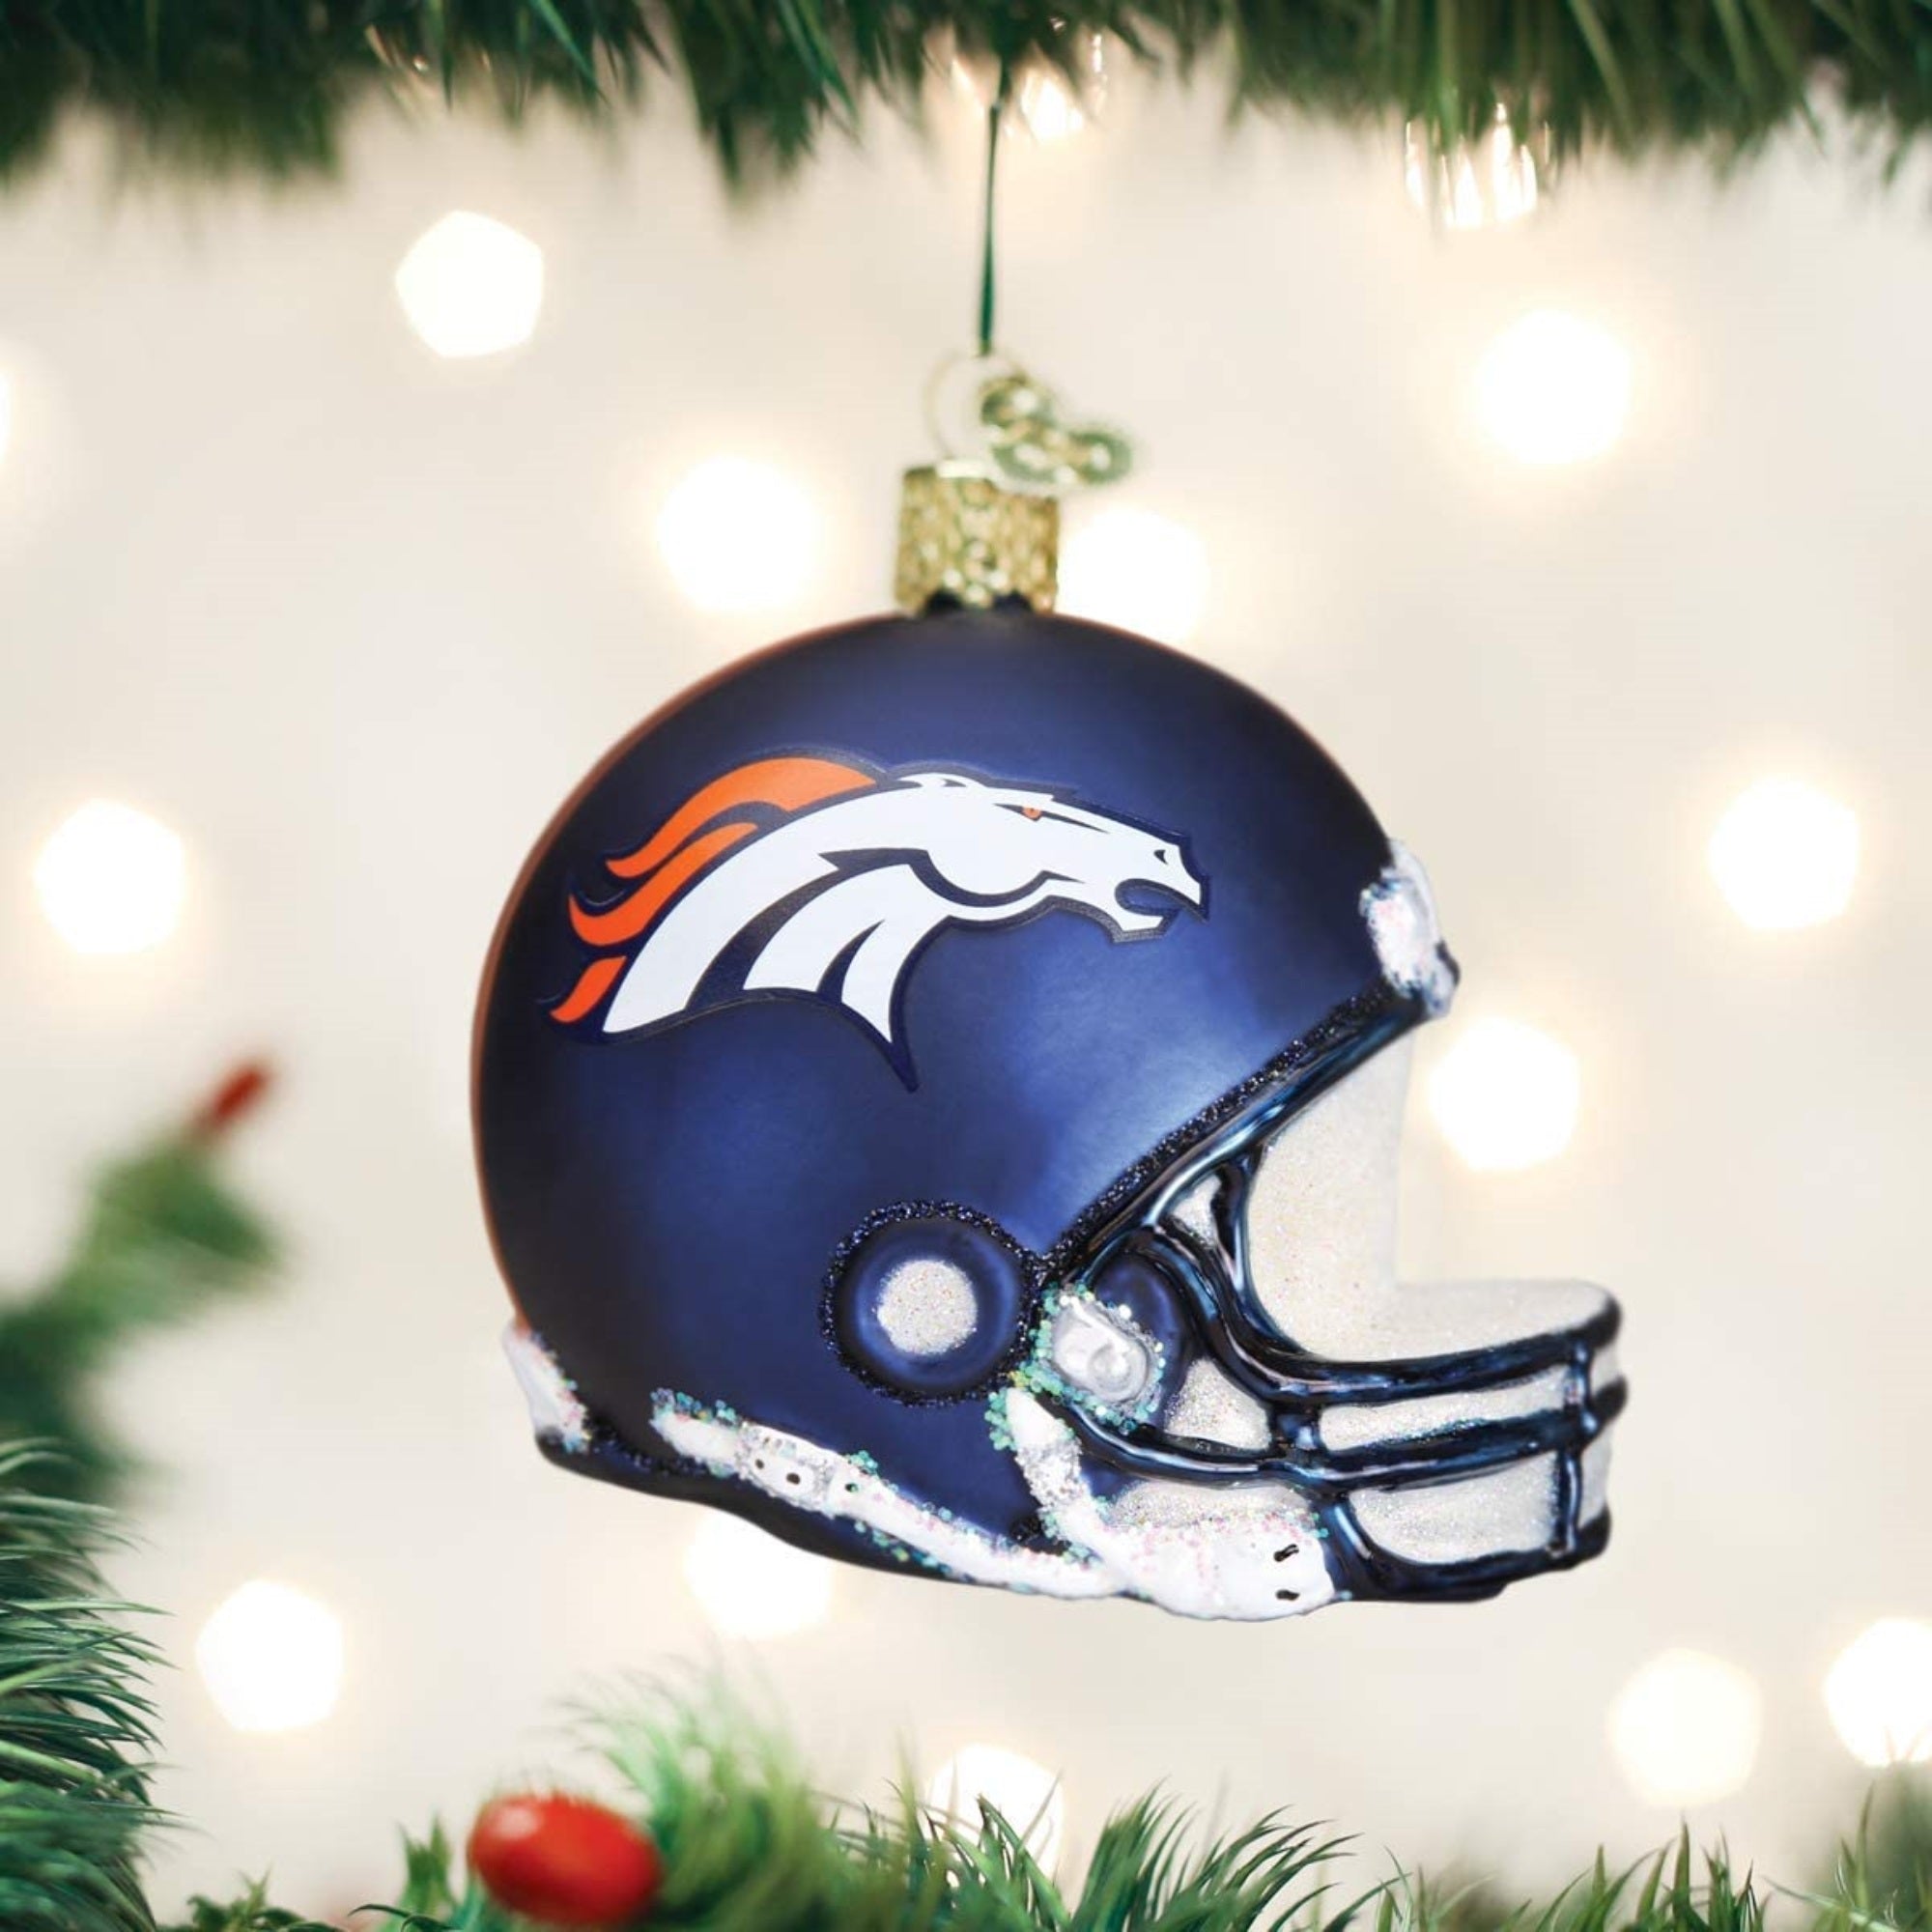 Old World Christmas Denver Broncos Helmet Ornament For Christmas Tree